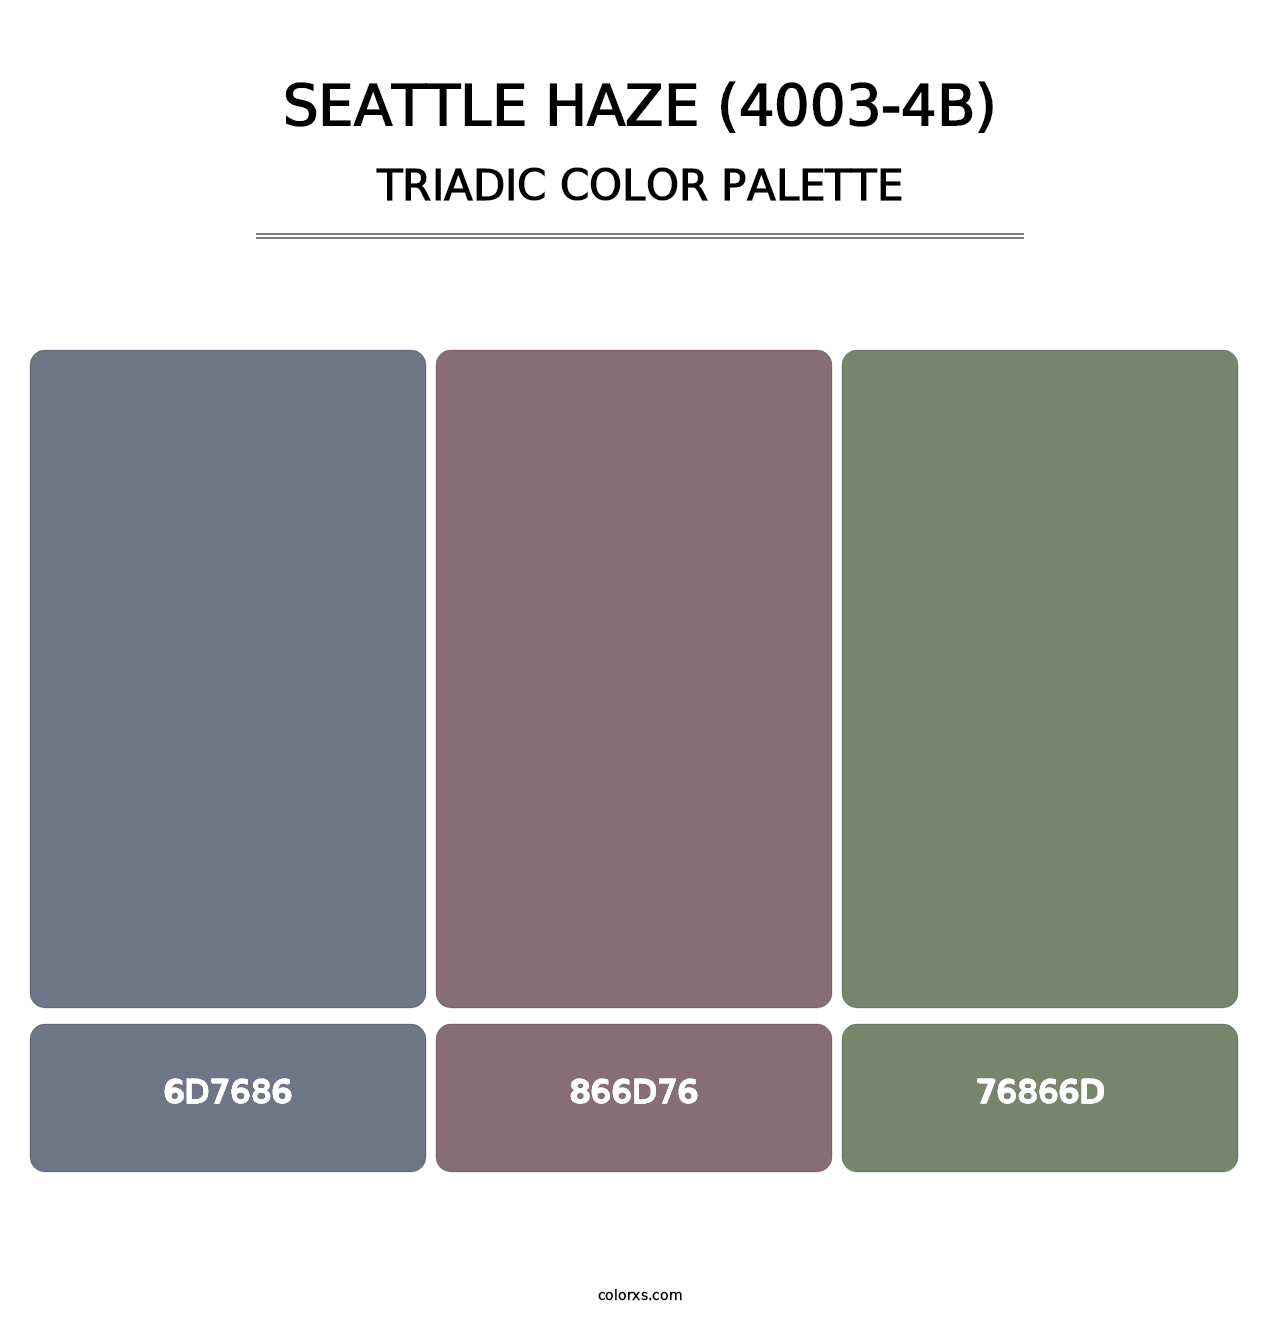 Seattle Haze (4003-4B) - Triadic Color Palette